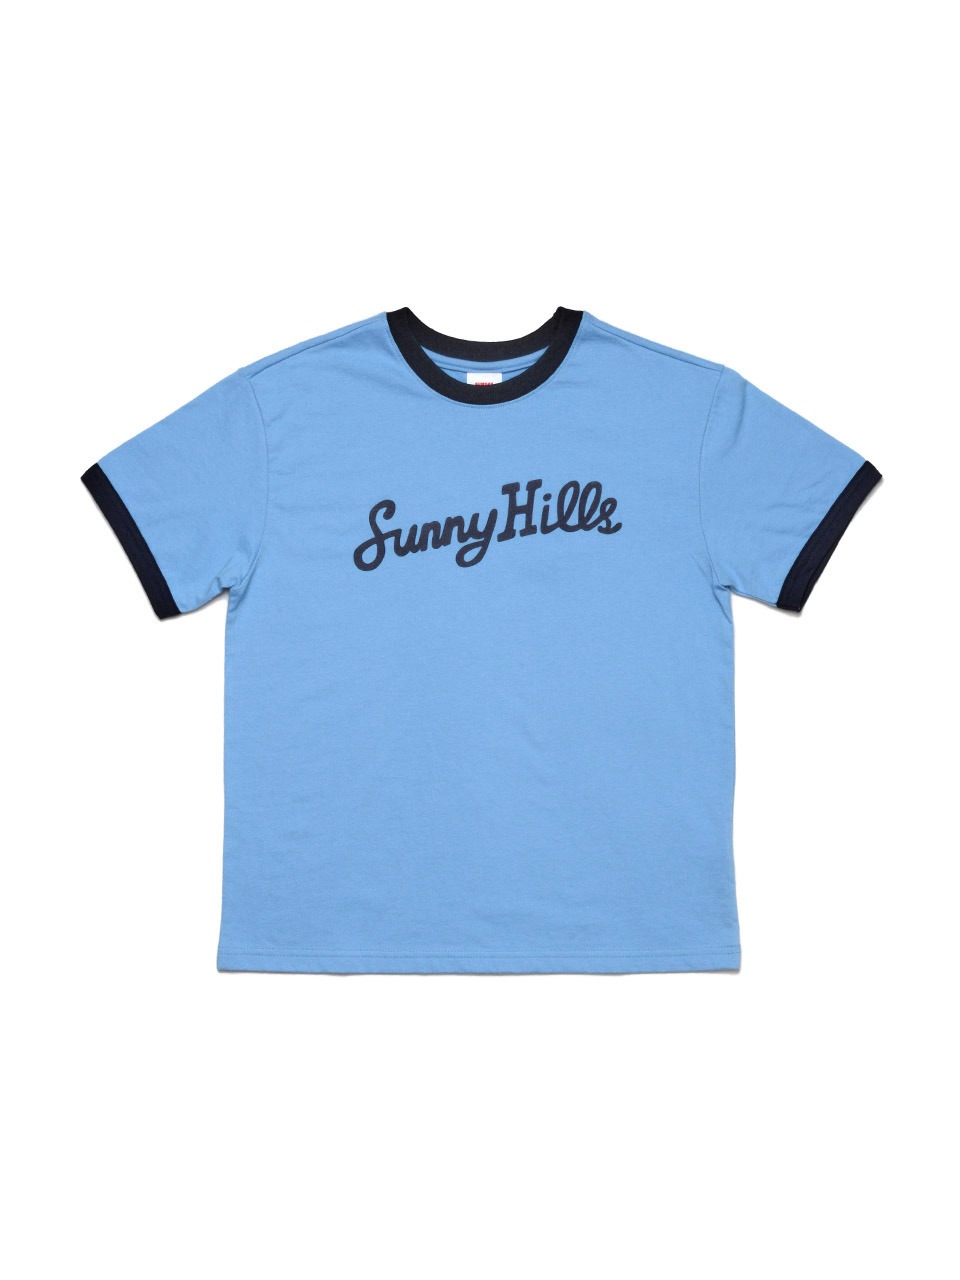 SUNNY HILLS TEE [Light Blue]